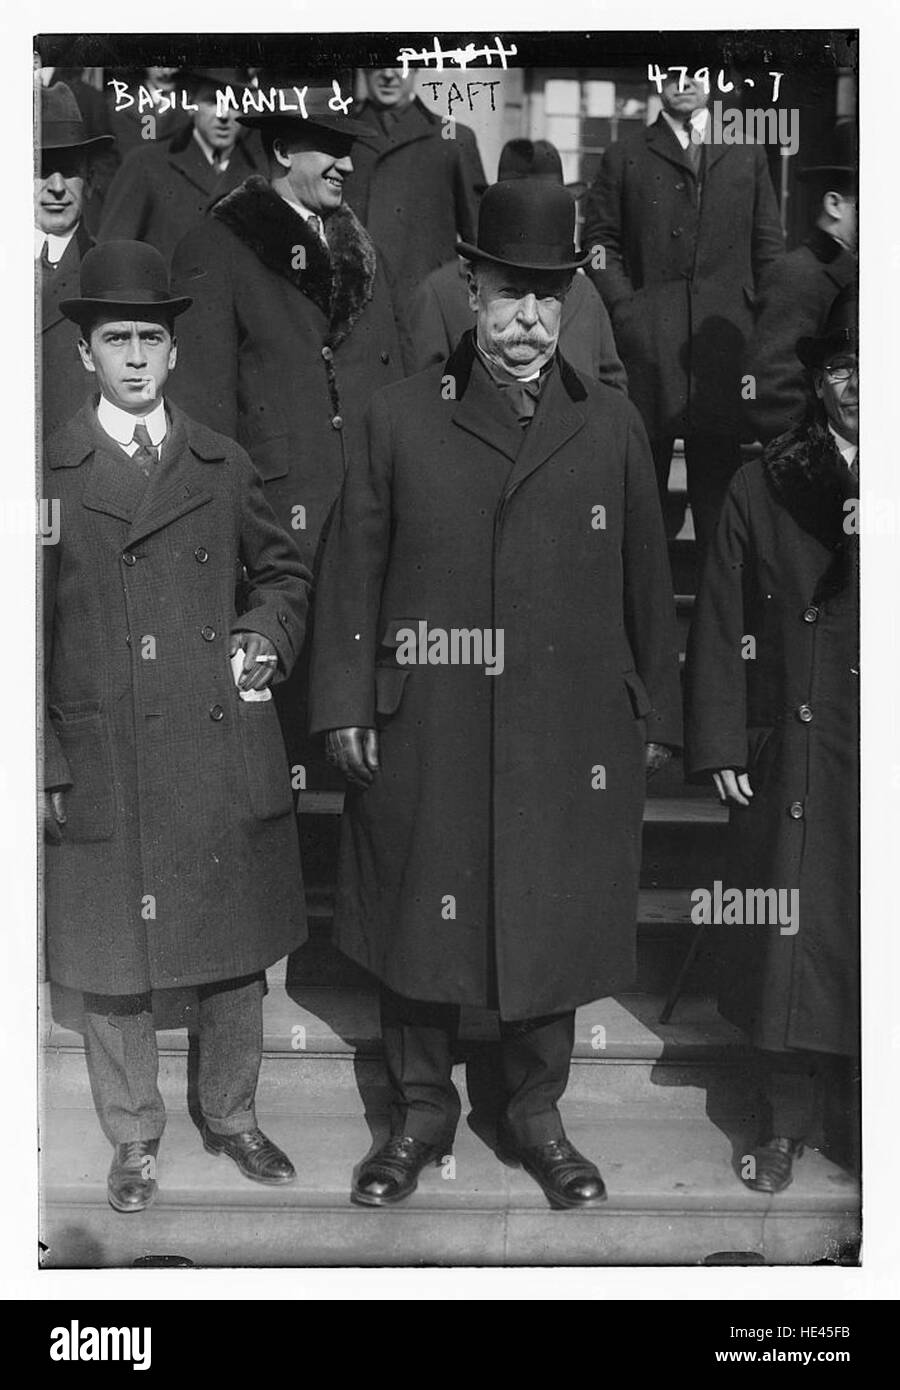 Basil Manly & Taft Stock Photo